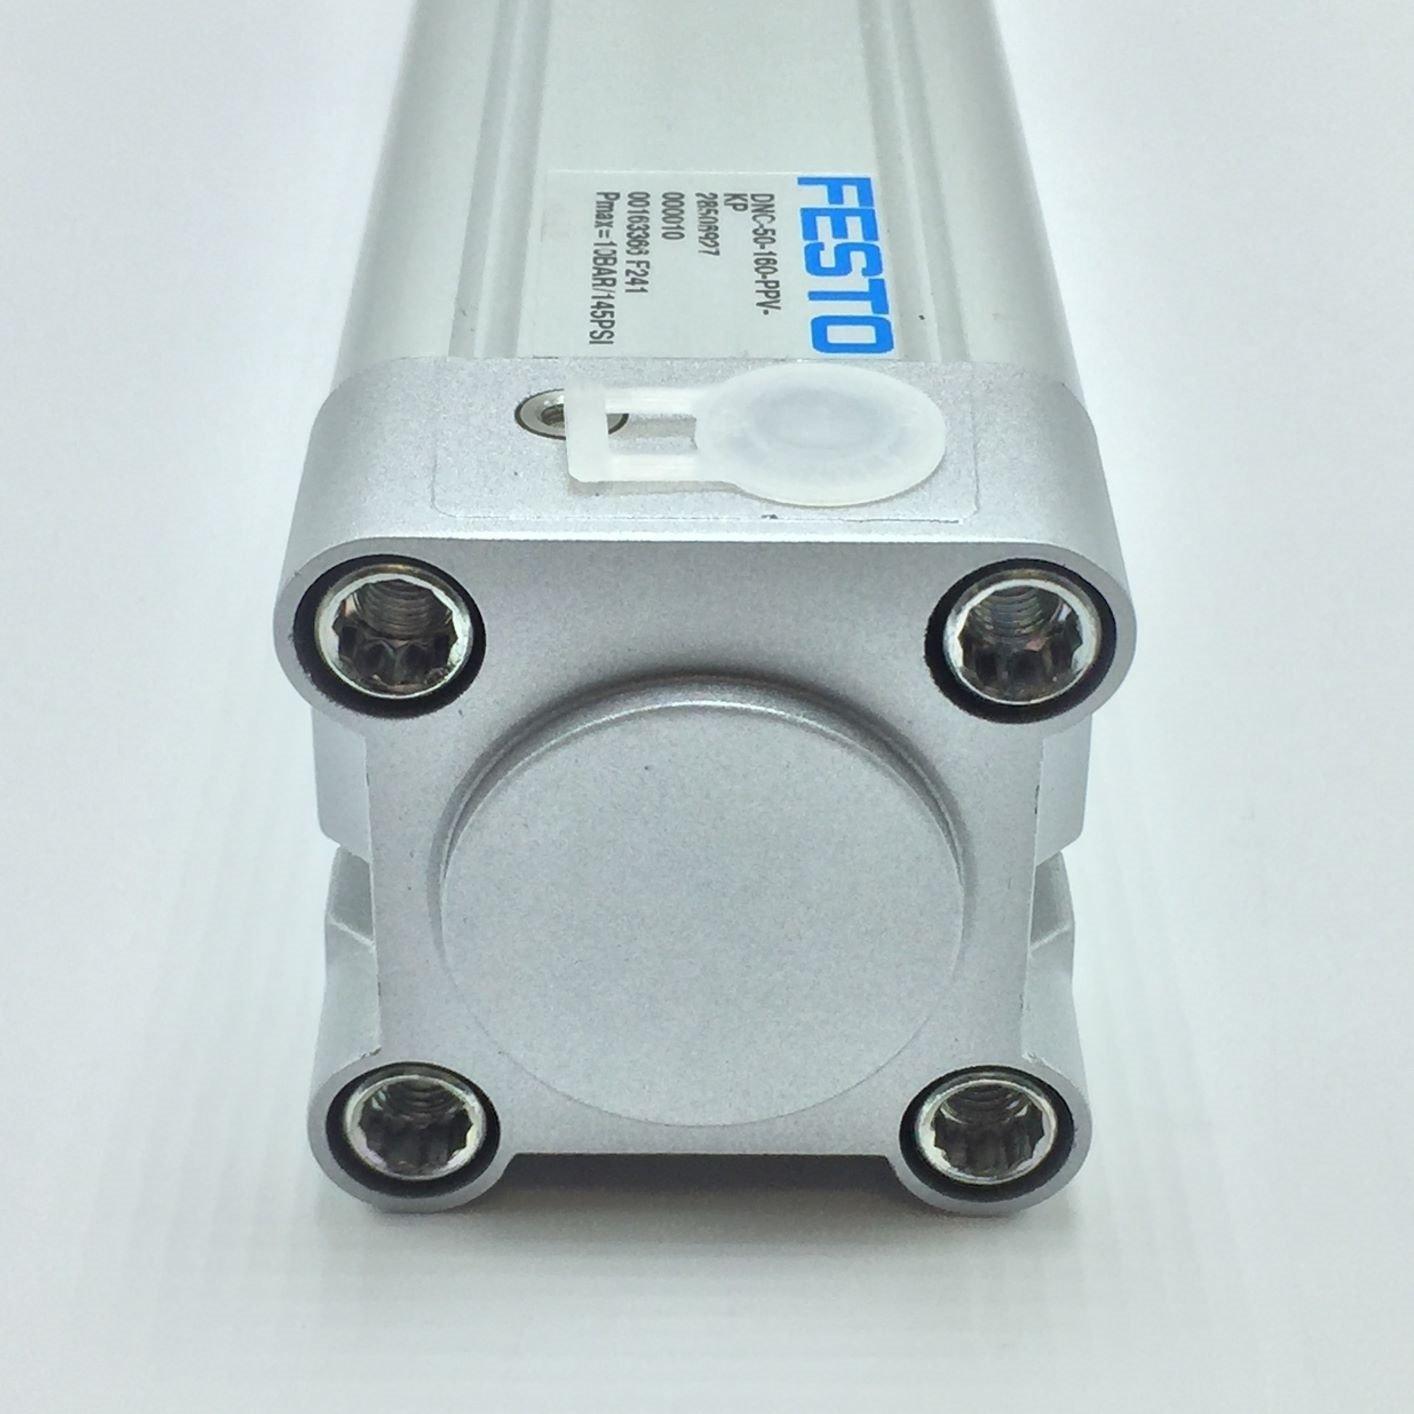 NEW Festo DNC-50-160-PPV-KP Standard Pneumatic Cylinder PN# 163366 